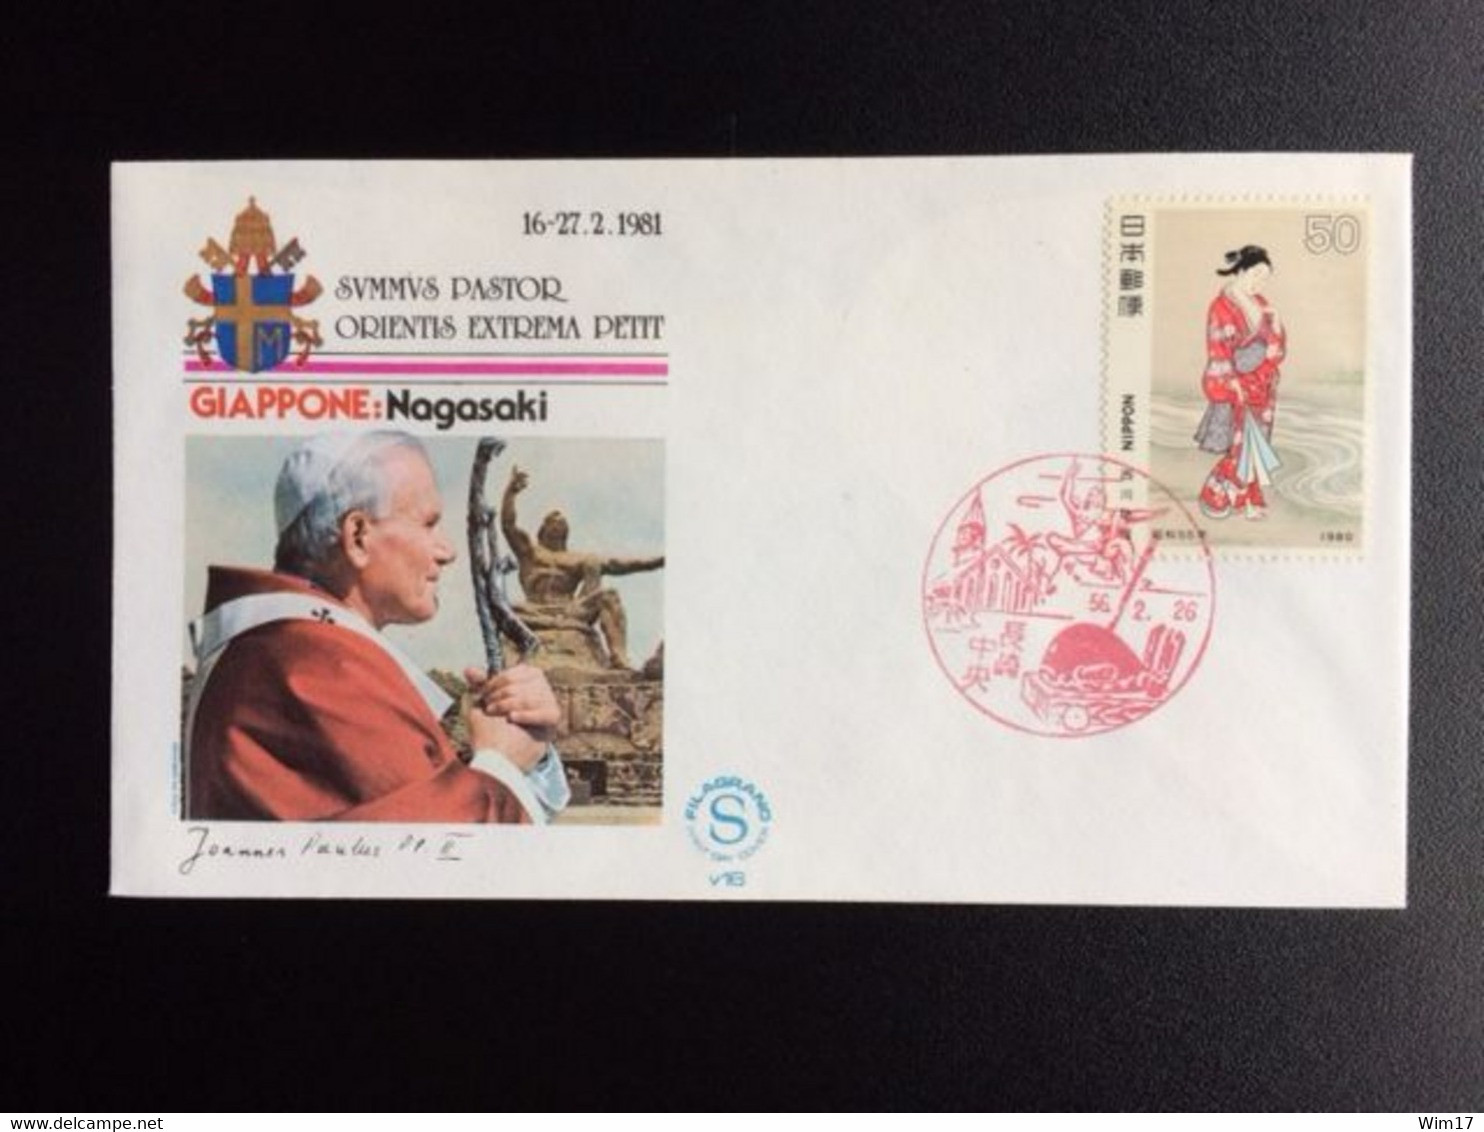 JAPAN 1981 POPE VISIT TO JAPAN 16-27 FEBR. 1981 - Briefe